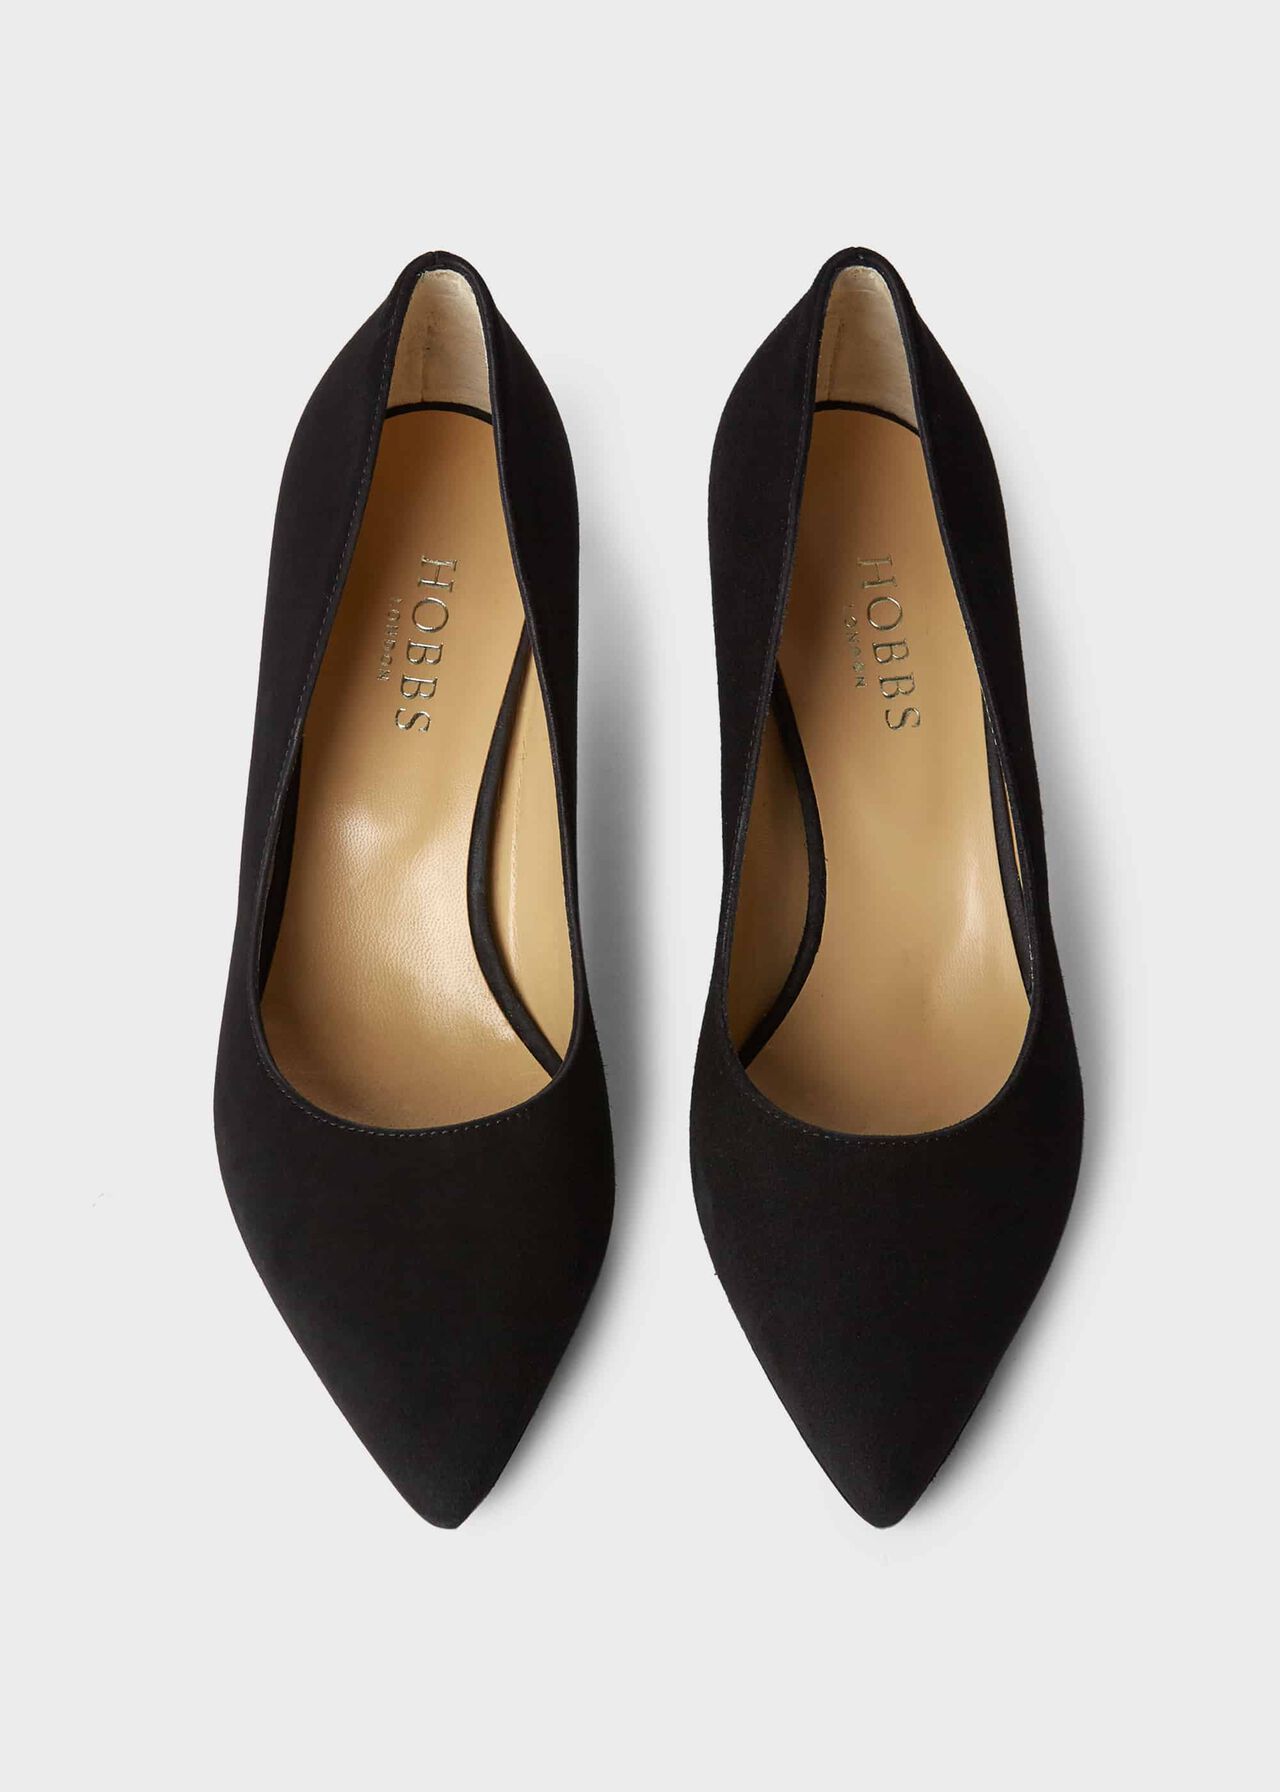 Polly Suede Kitten Heel Court Shoes, Black, hi-res